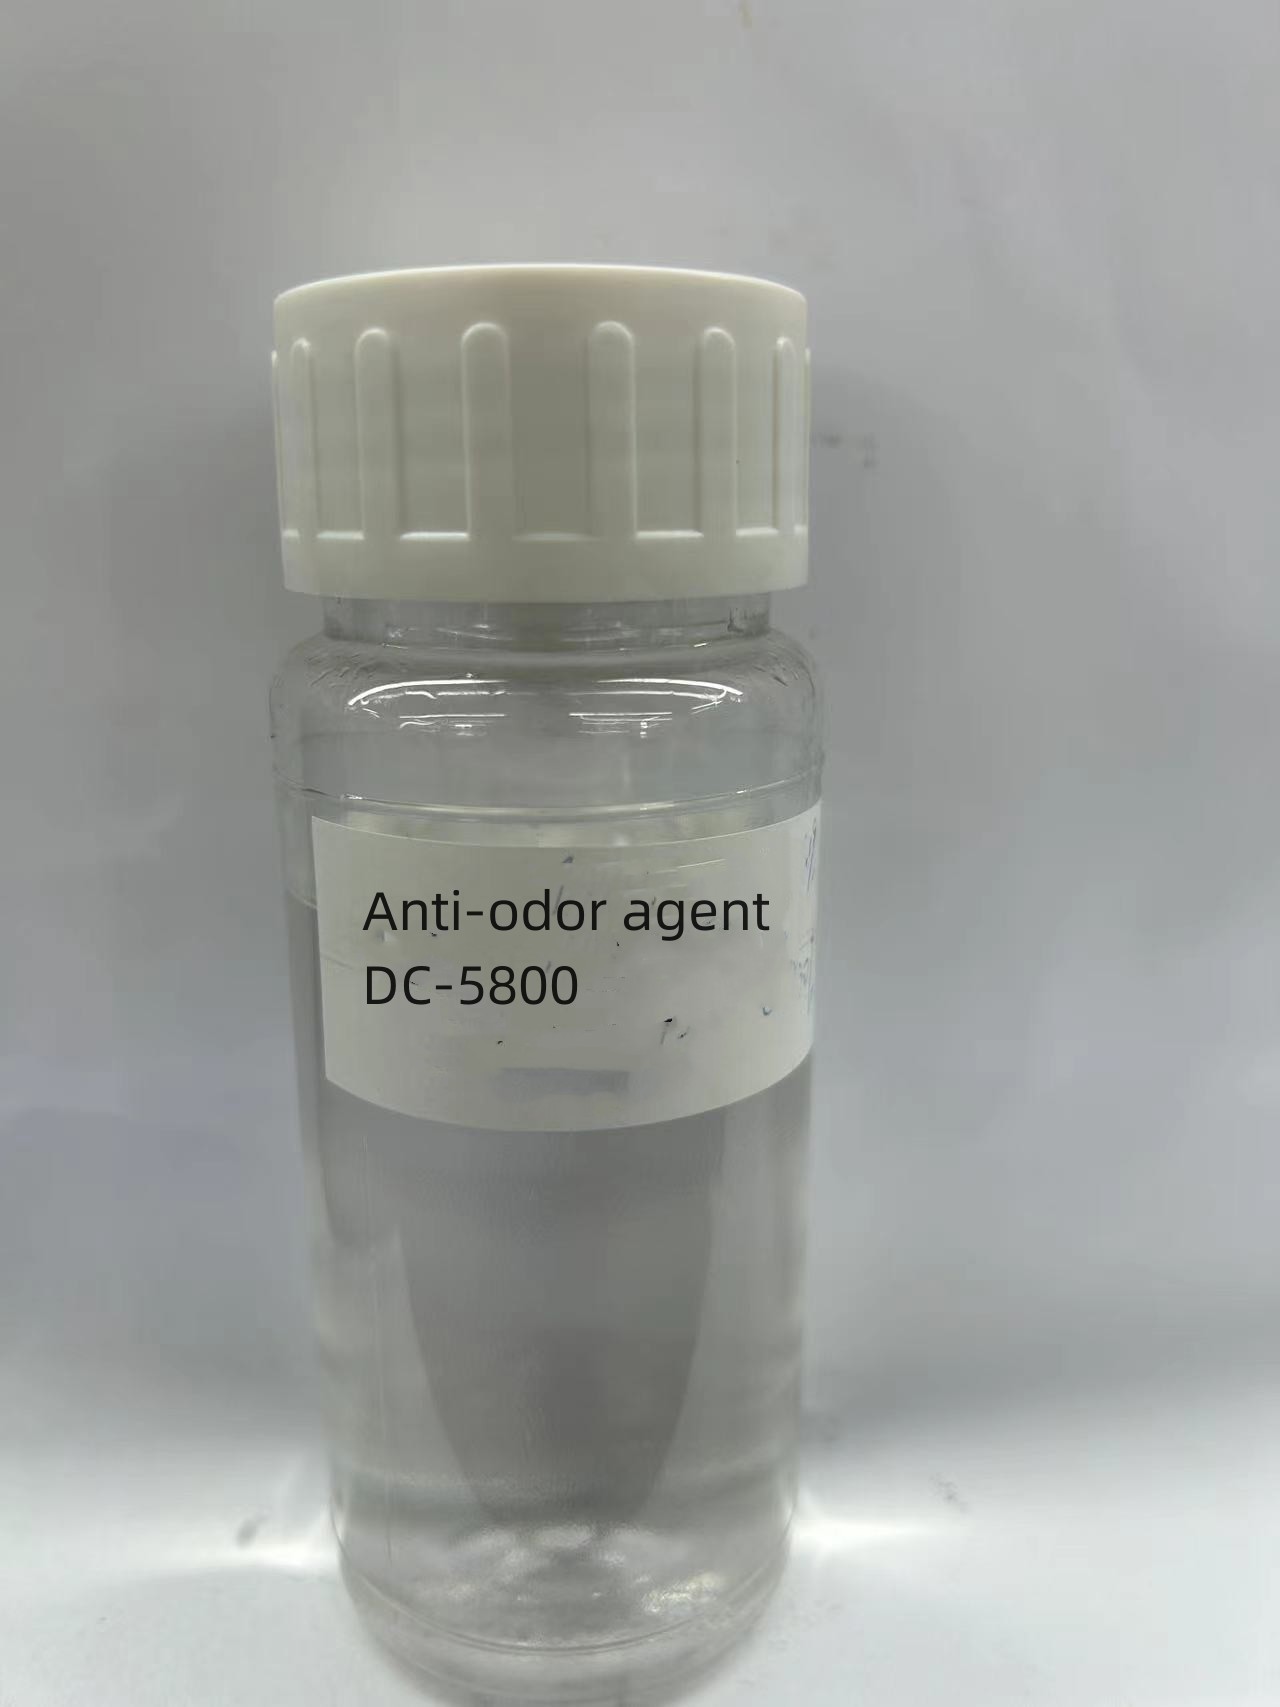 Anti-odor agent DC-5800